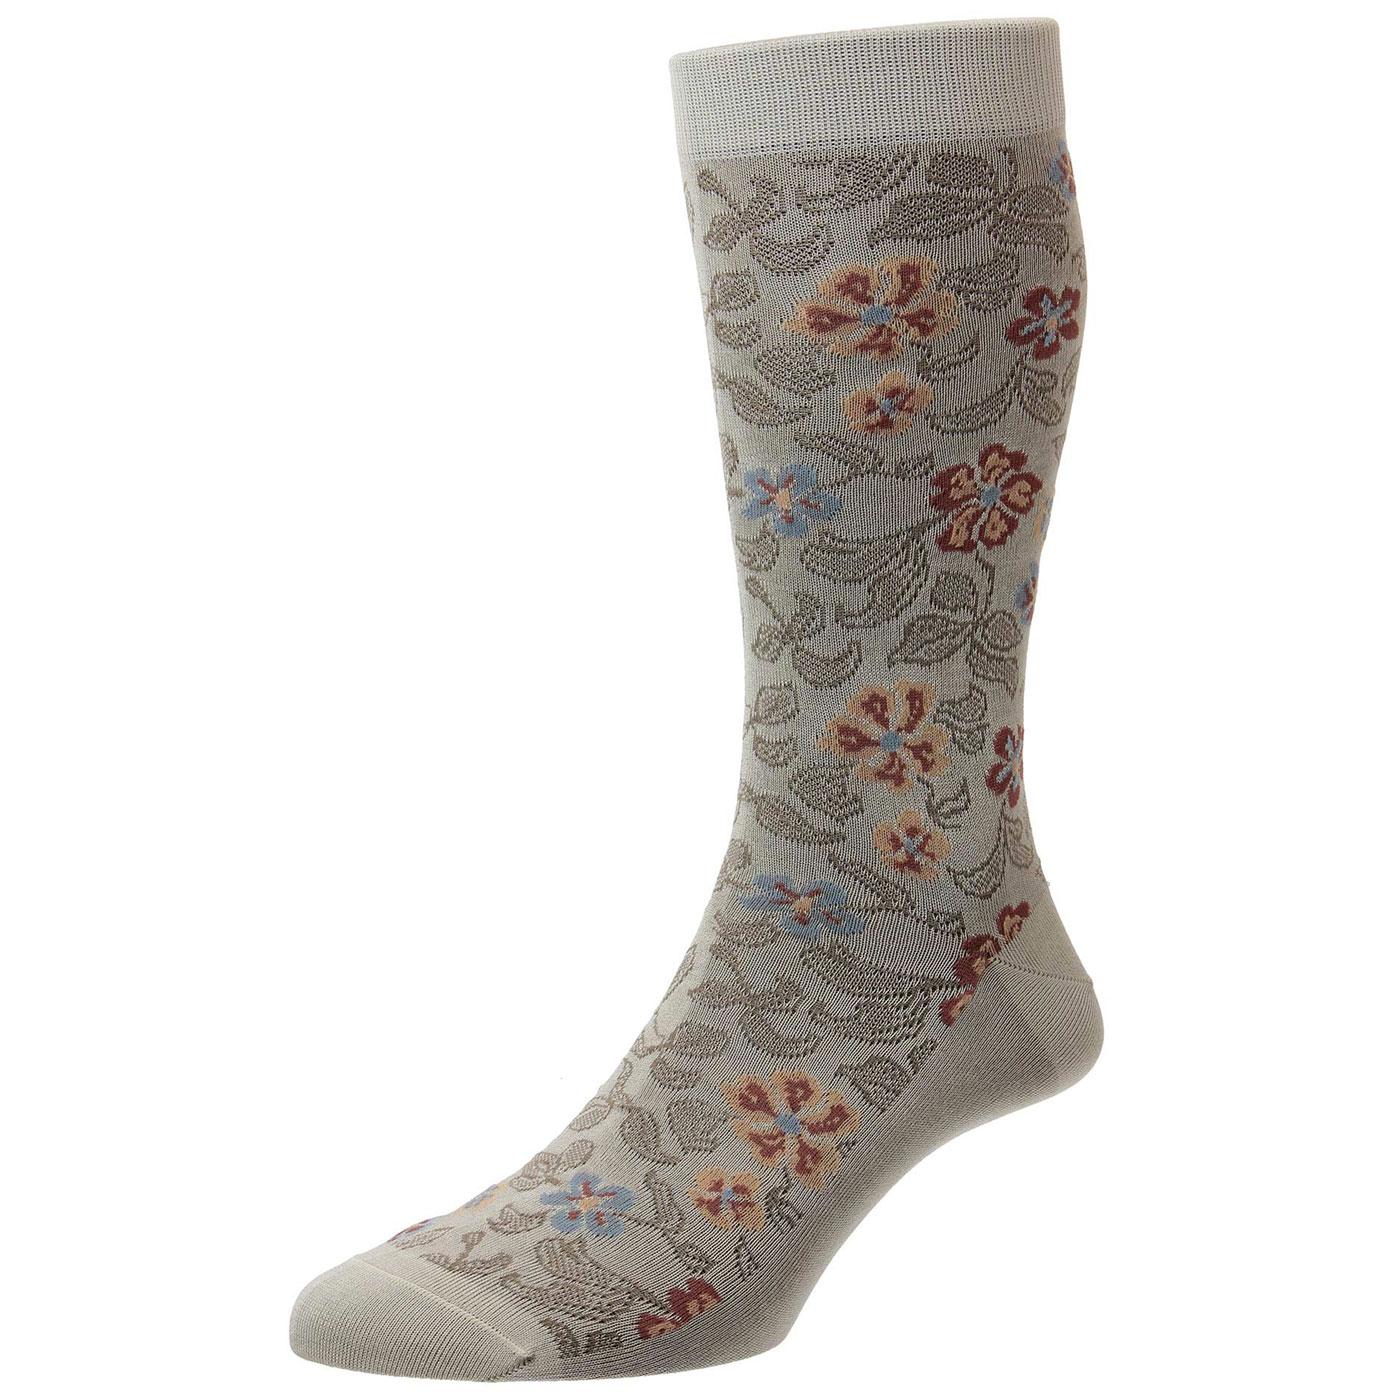 PANTHERELLA Farren Men's Vintage Floral Socks in Calico